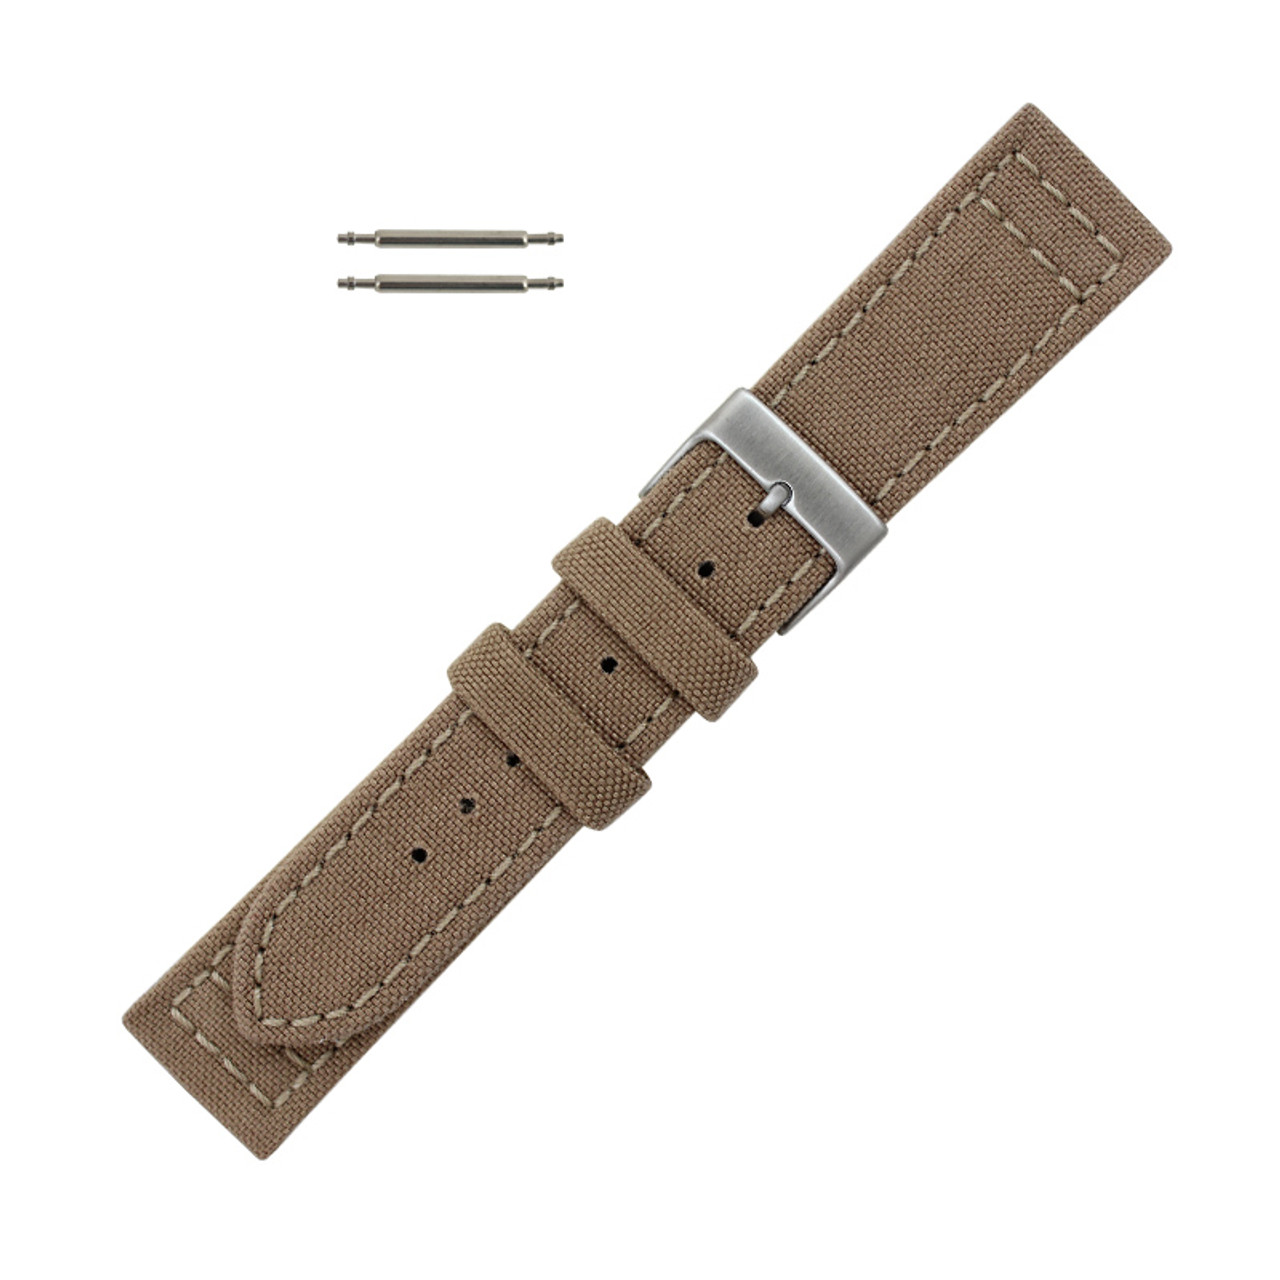 22mm cordura watch strap